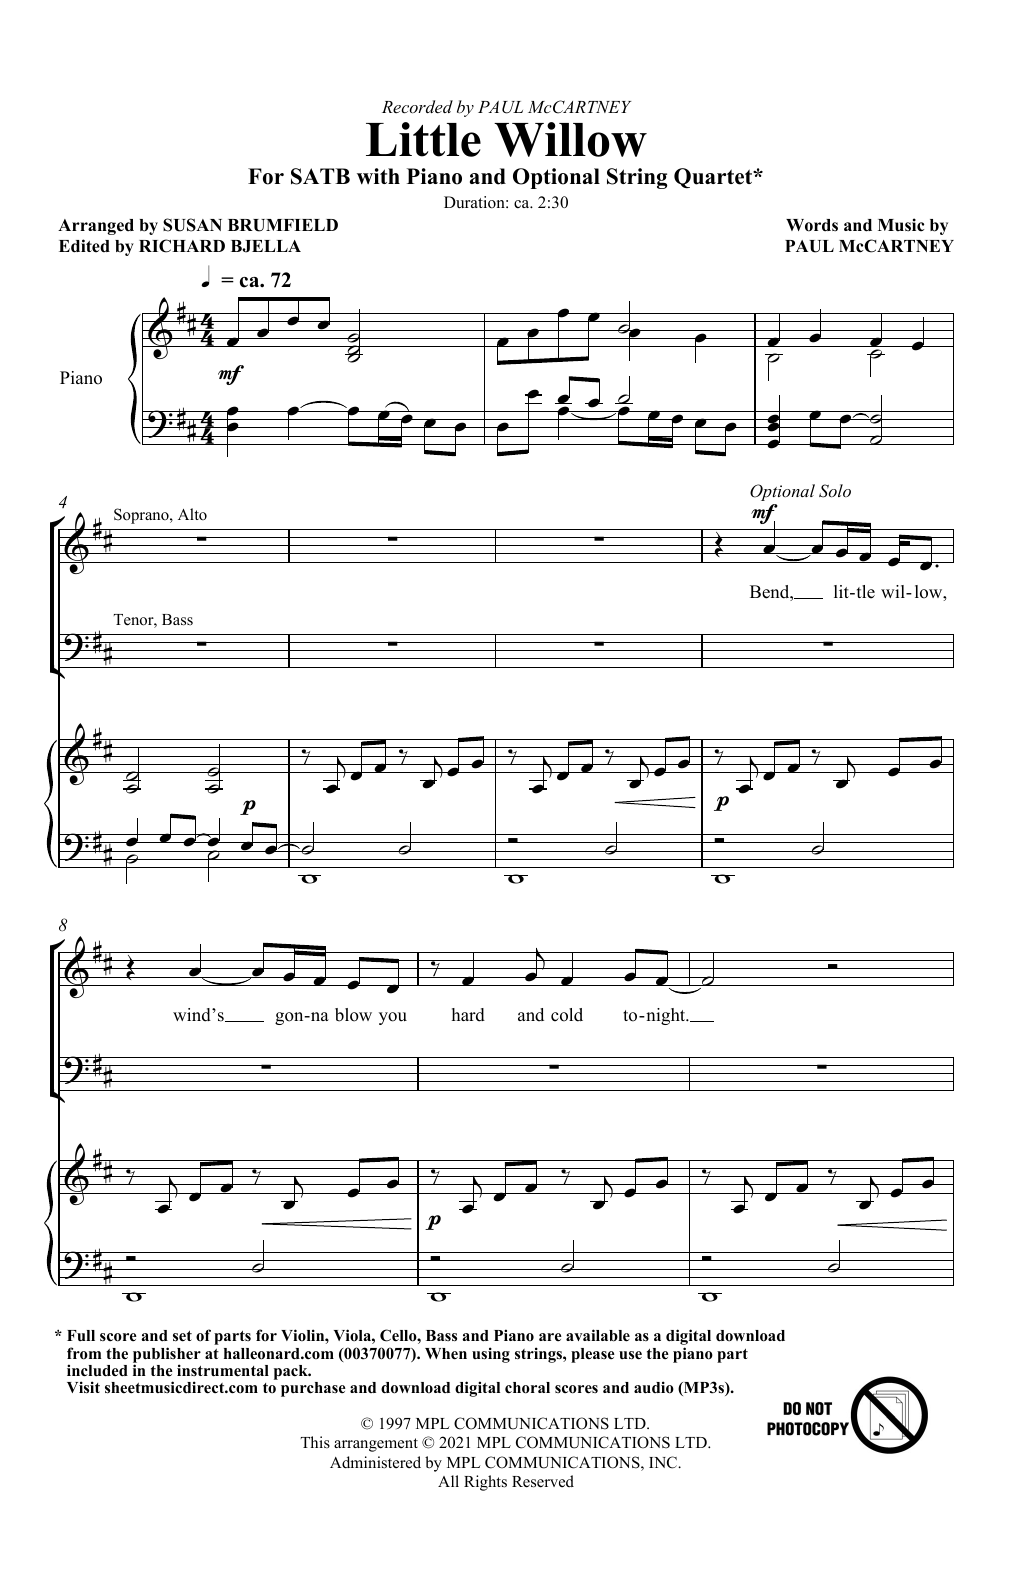 Paul McCartney Little Willow (arr. Susan Brumfield) sheet music notes and chords arranged for SATB Choir